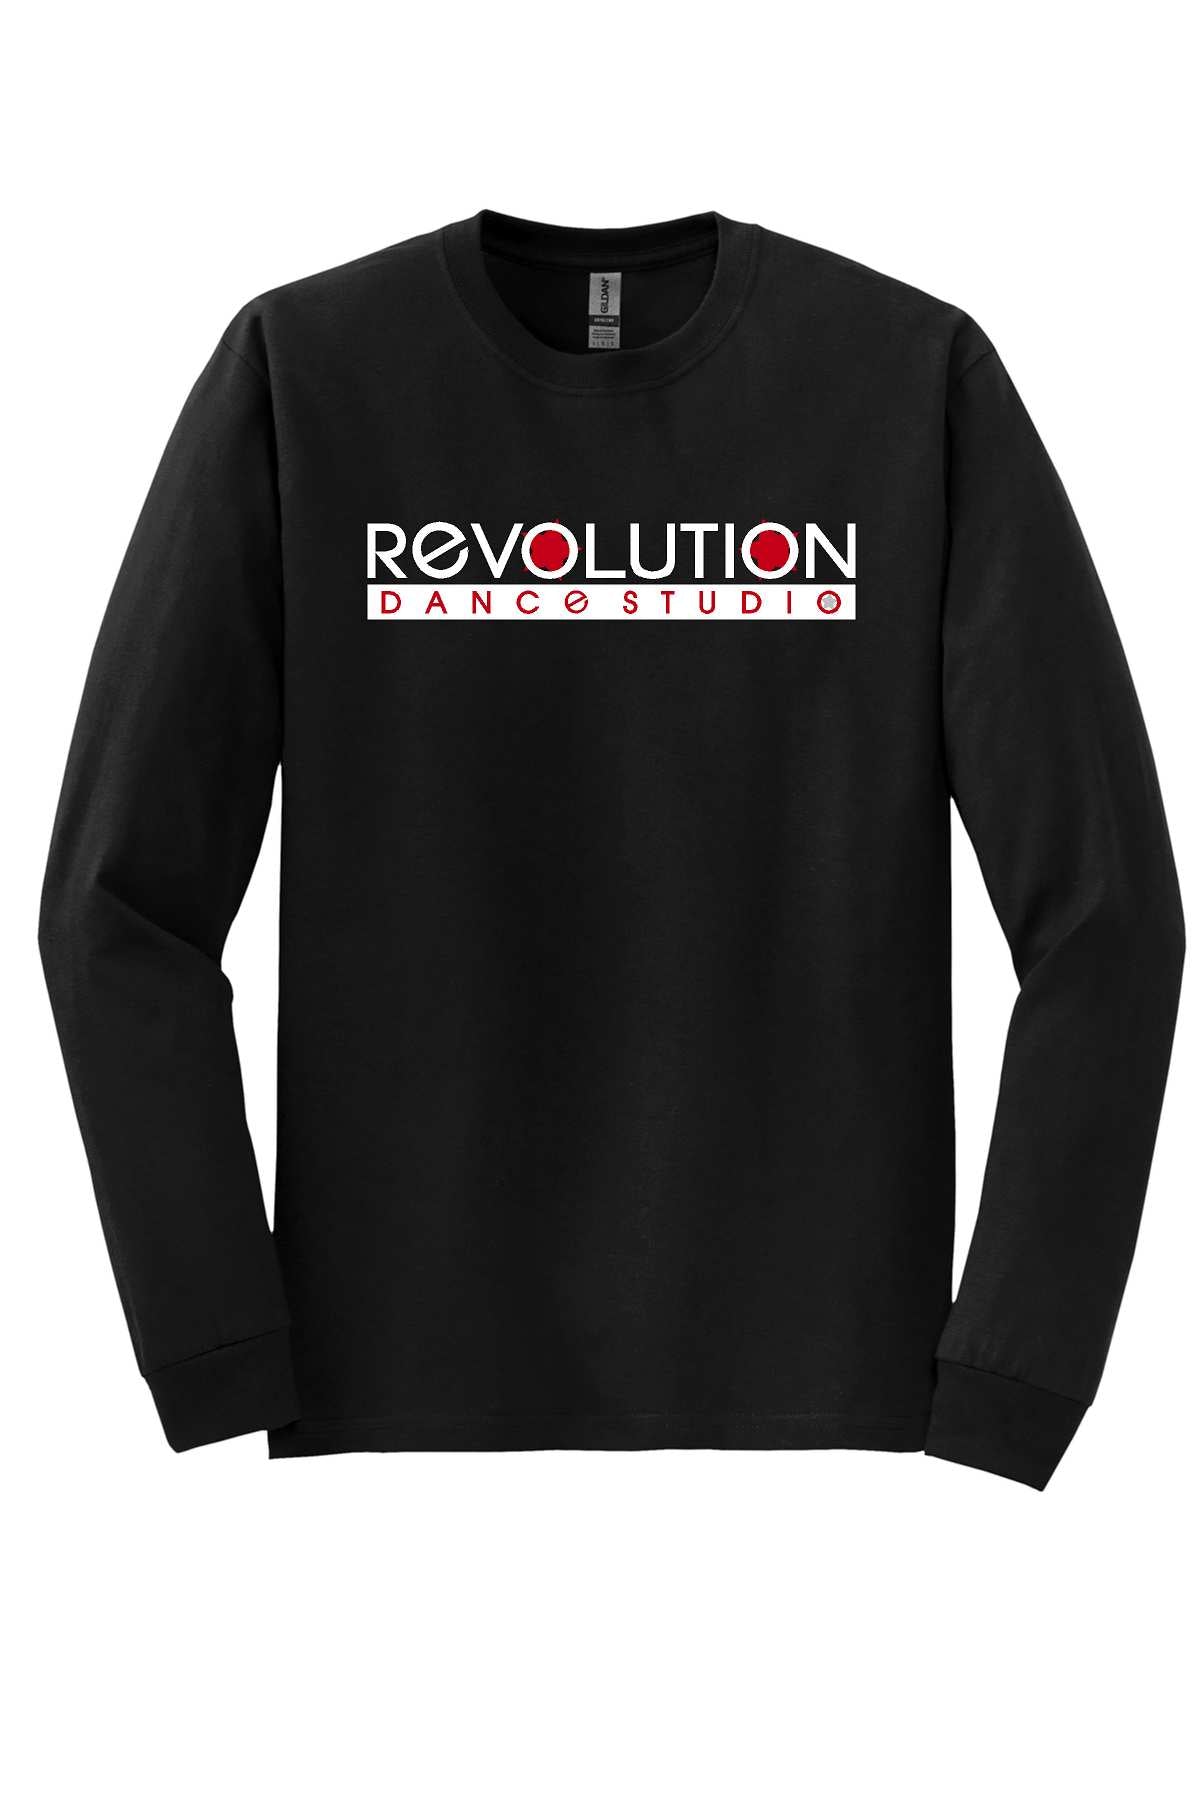 Revolution Dance Long sleeve tshirt, unisex adult/youth BC3501